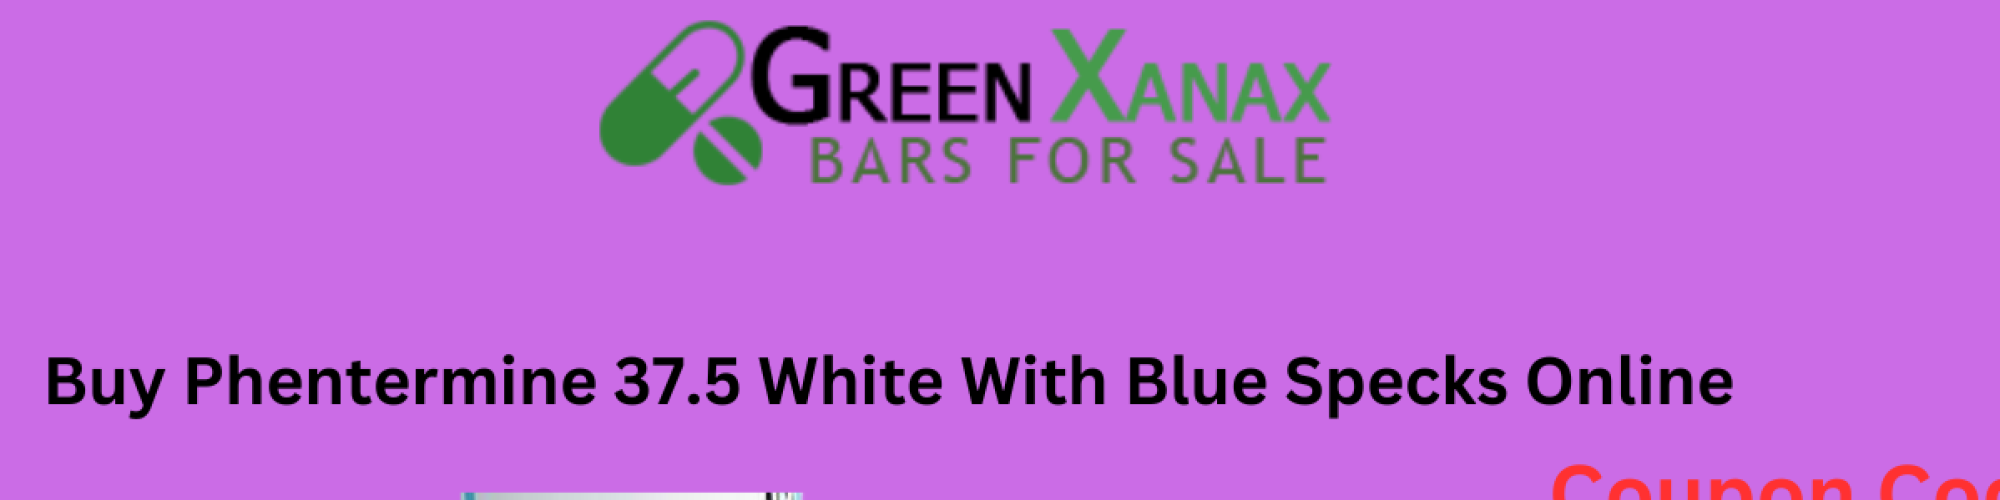 Buy Phentermine 37.5 White With Blue Specks Online 